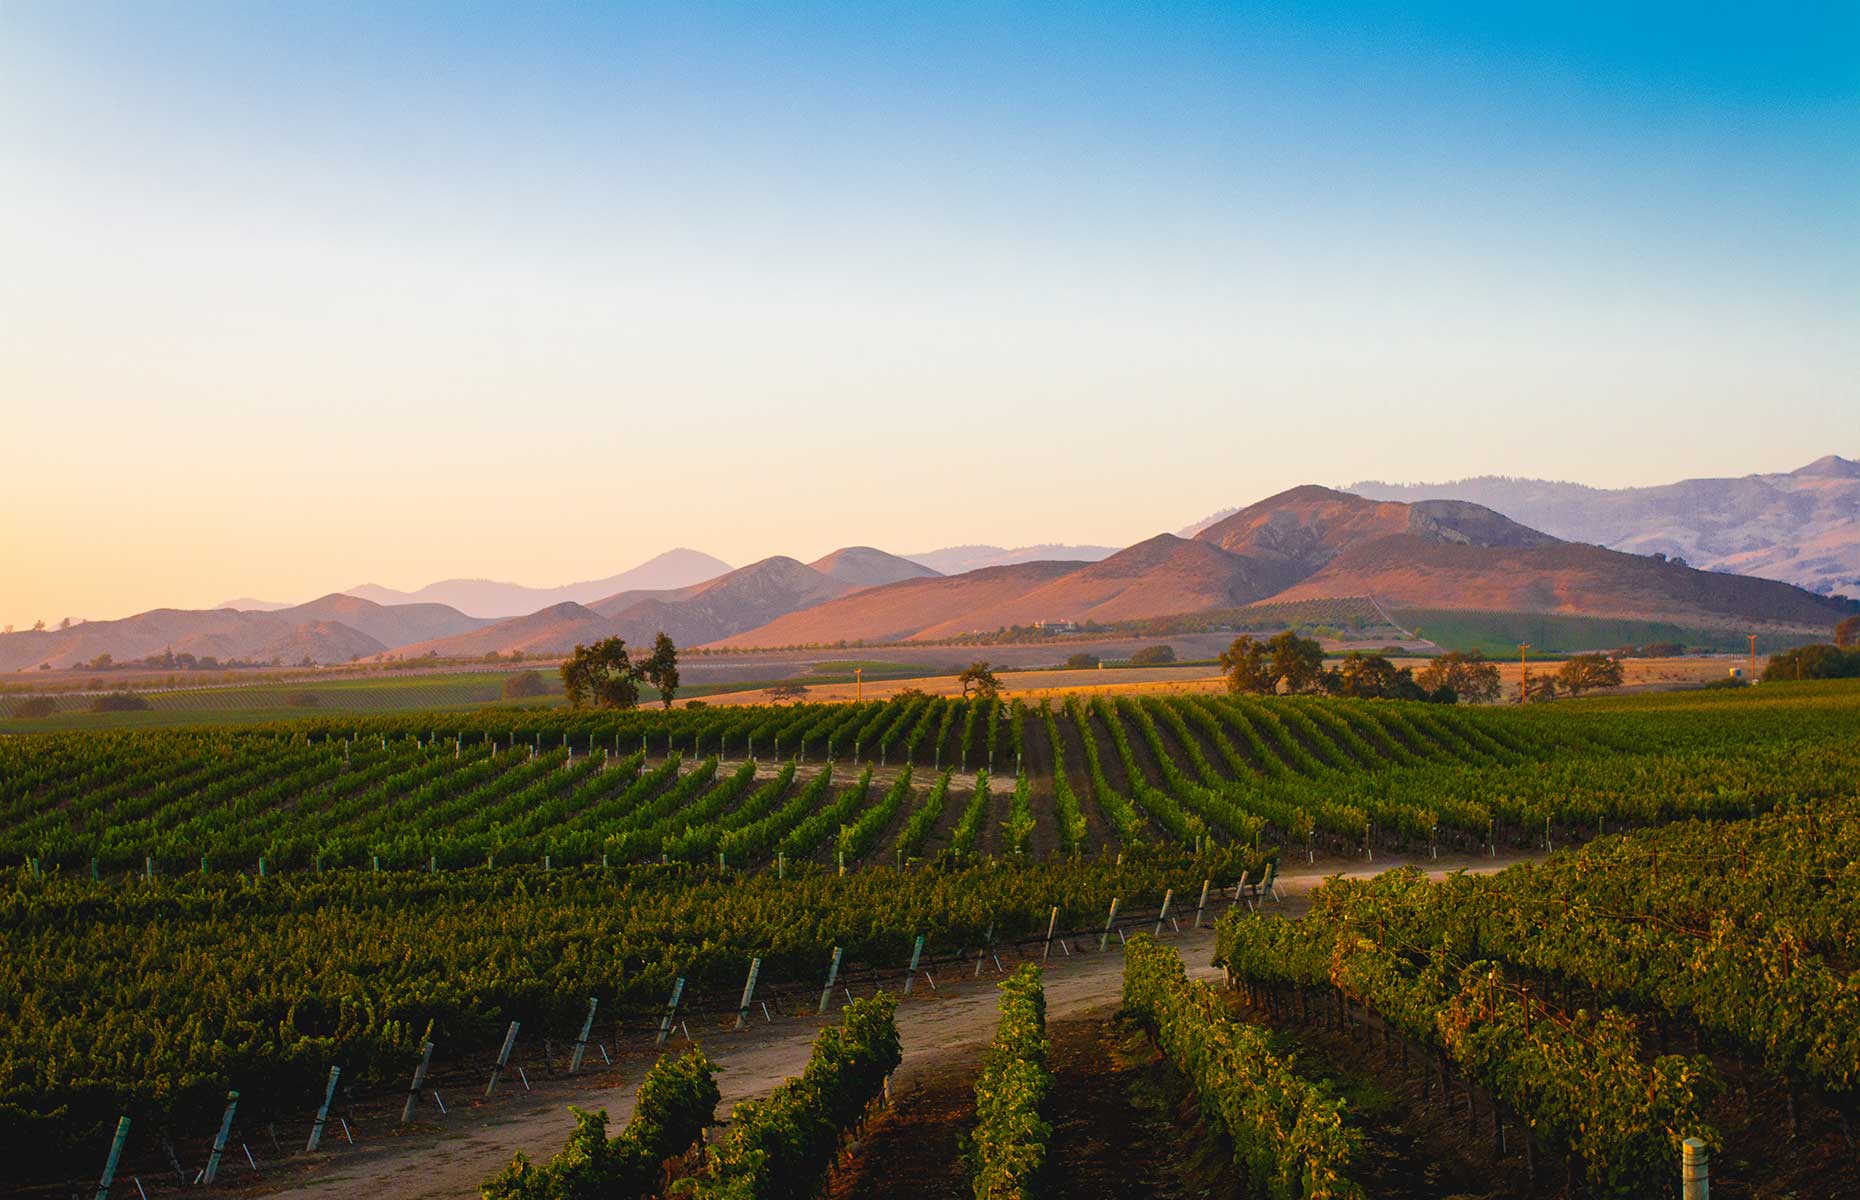 Santa Ynez Valley (Image: Carolin Sunshine/Shutterstock)